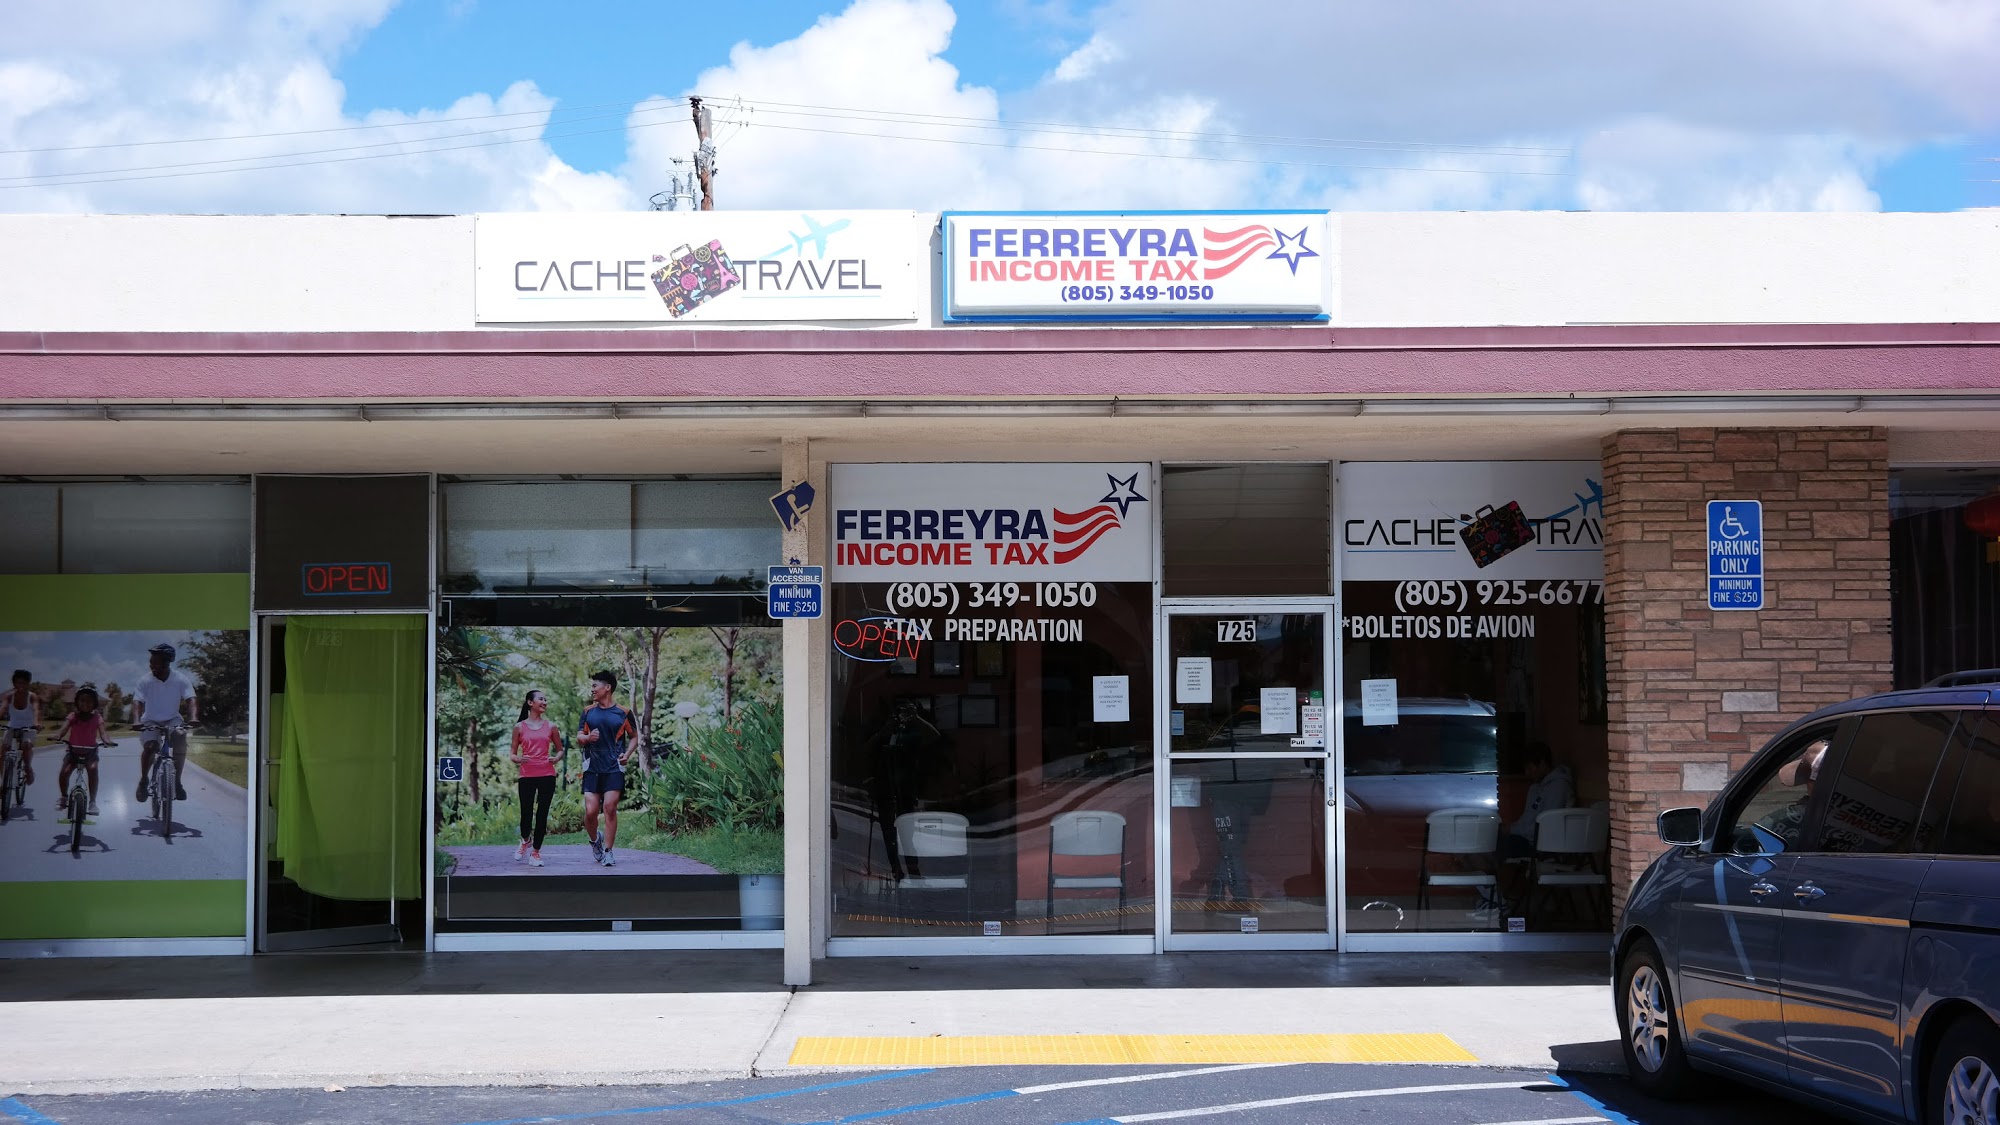 Ferreyra Income Tax and Cache Travel